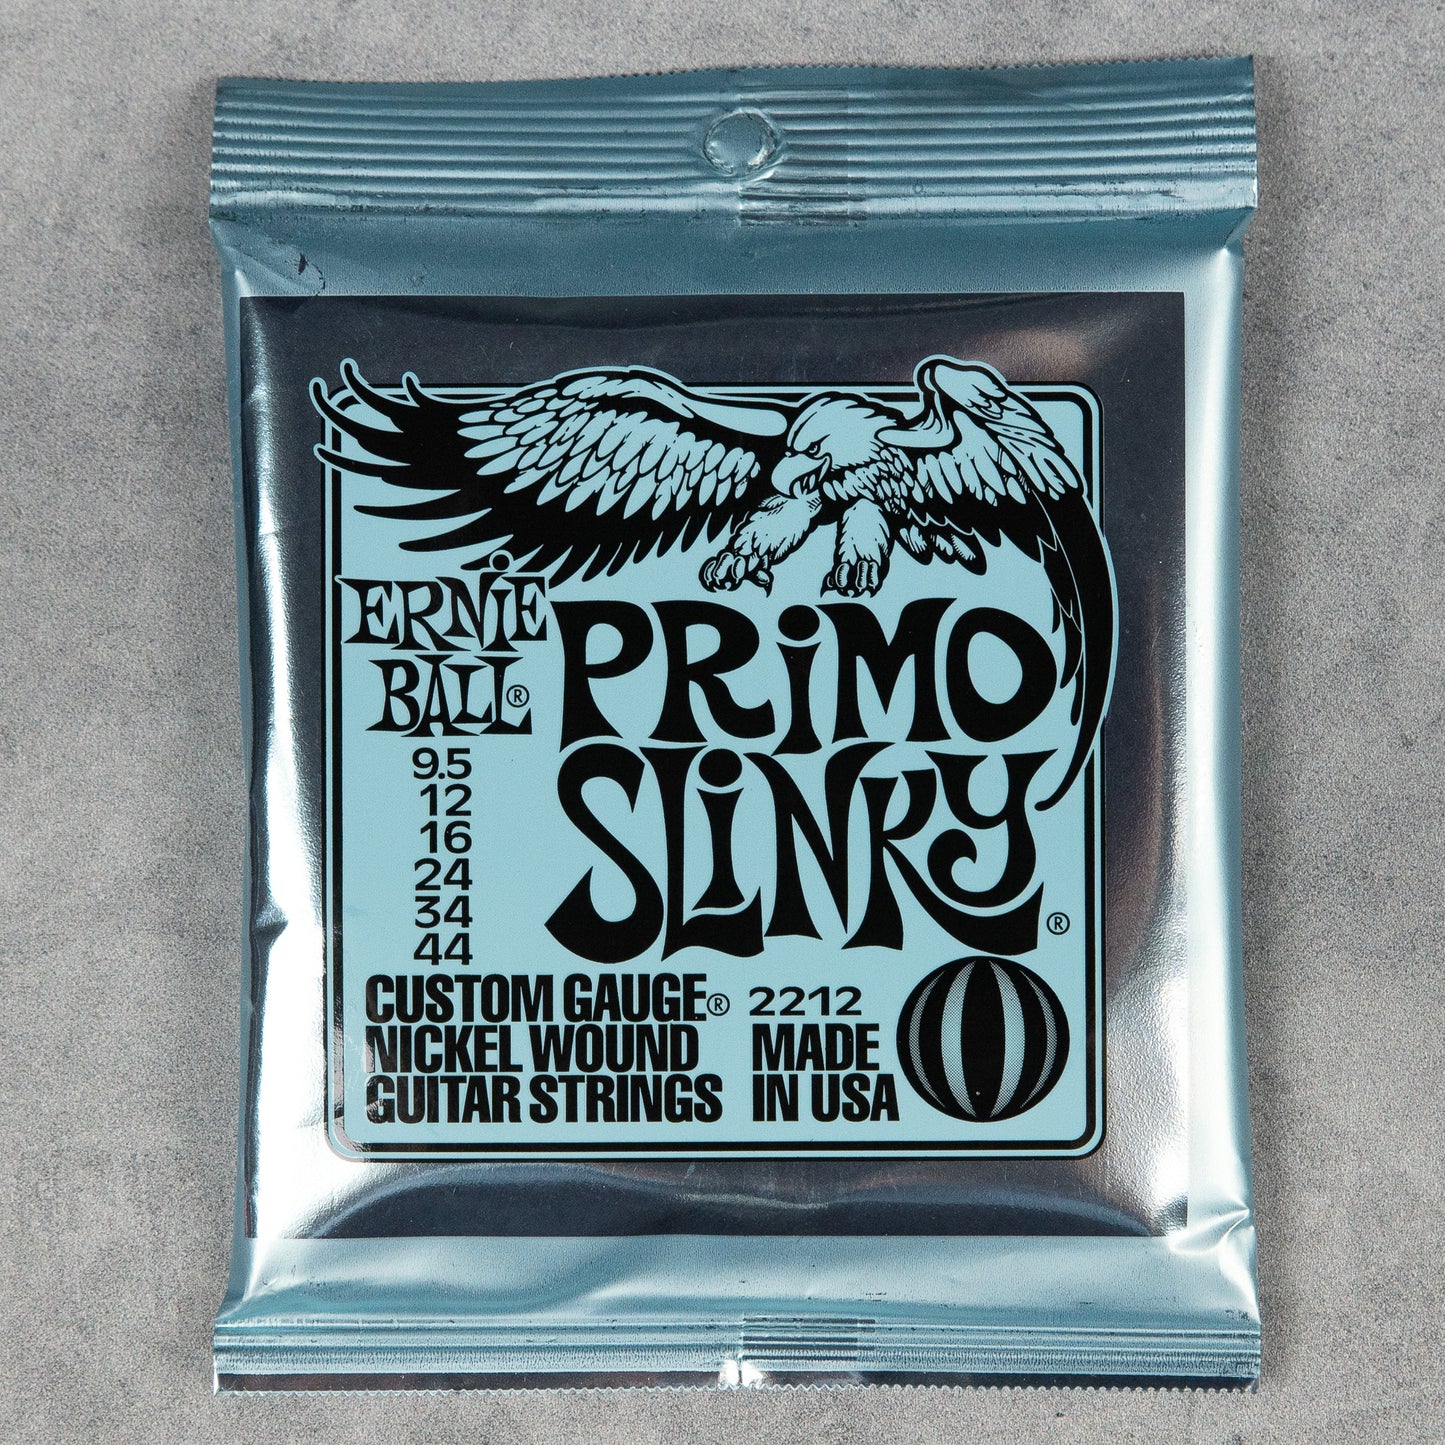 Ernie Ball Primo Slinky Nickel Wound Electric Guitar Strings, 9.5-44